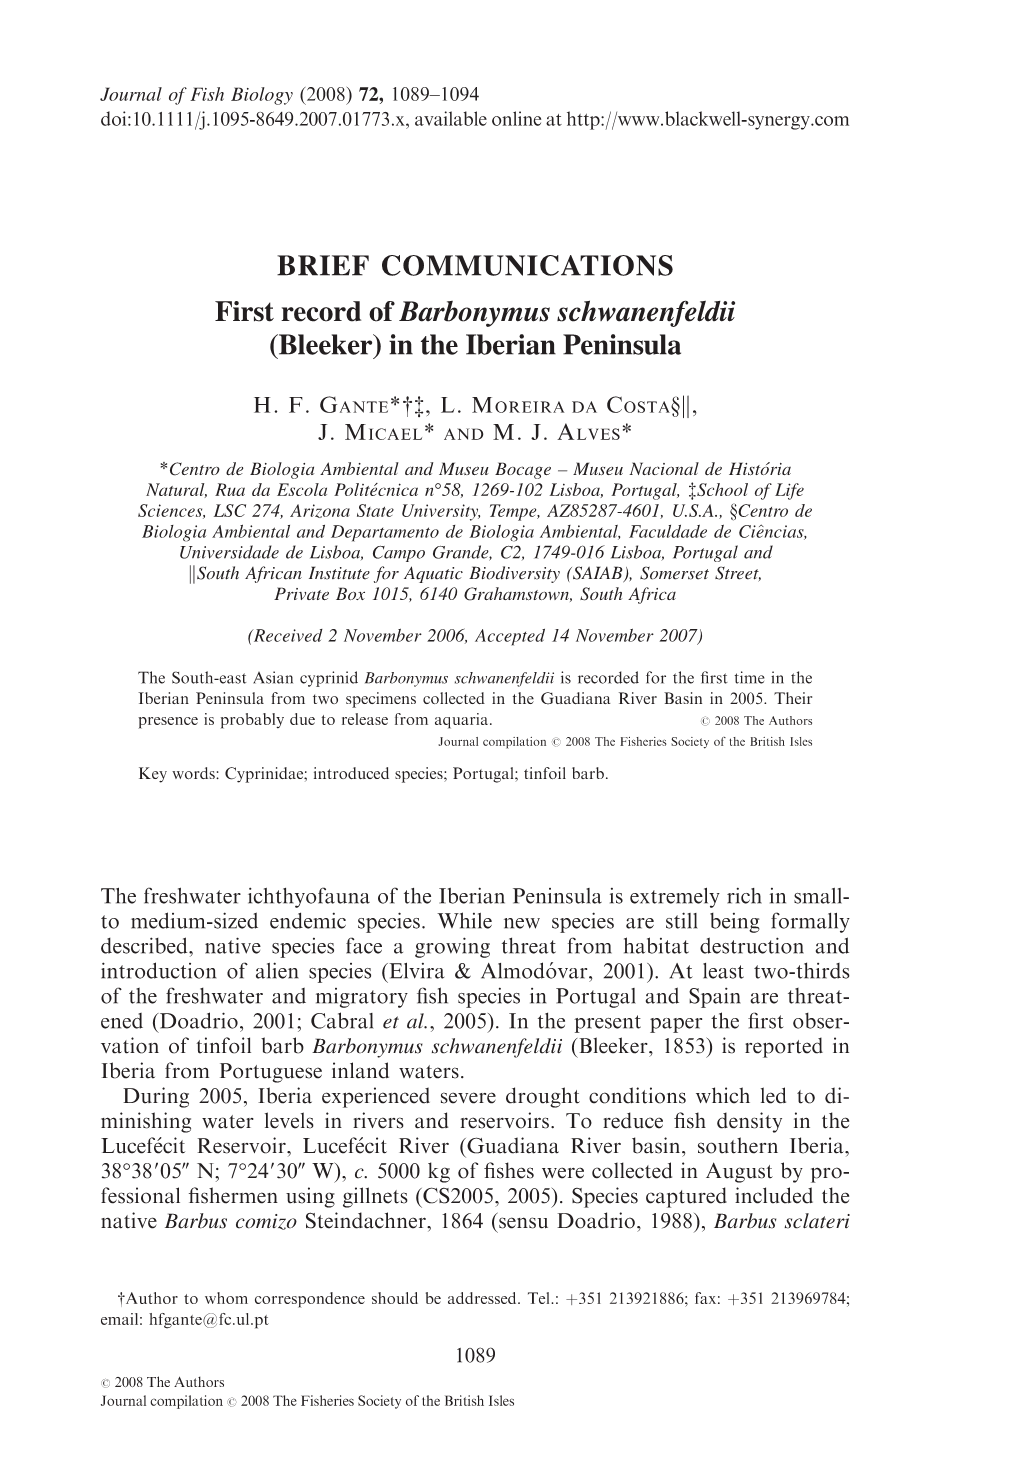 BRIEF COMMUNICATIONS First Record of Barbonymus Schwanenfeldii (Bleeker) in the Iberian Peninsula